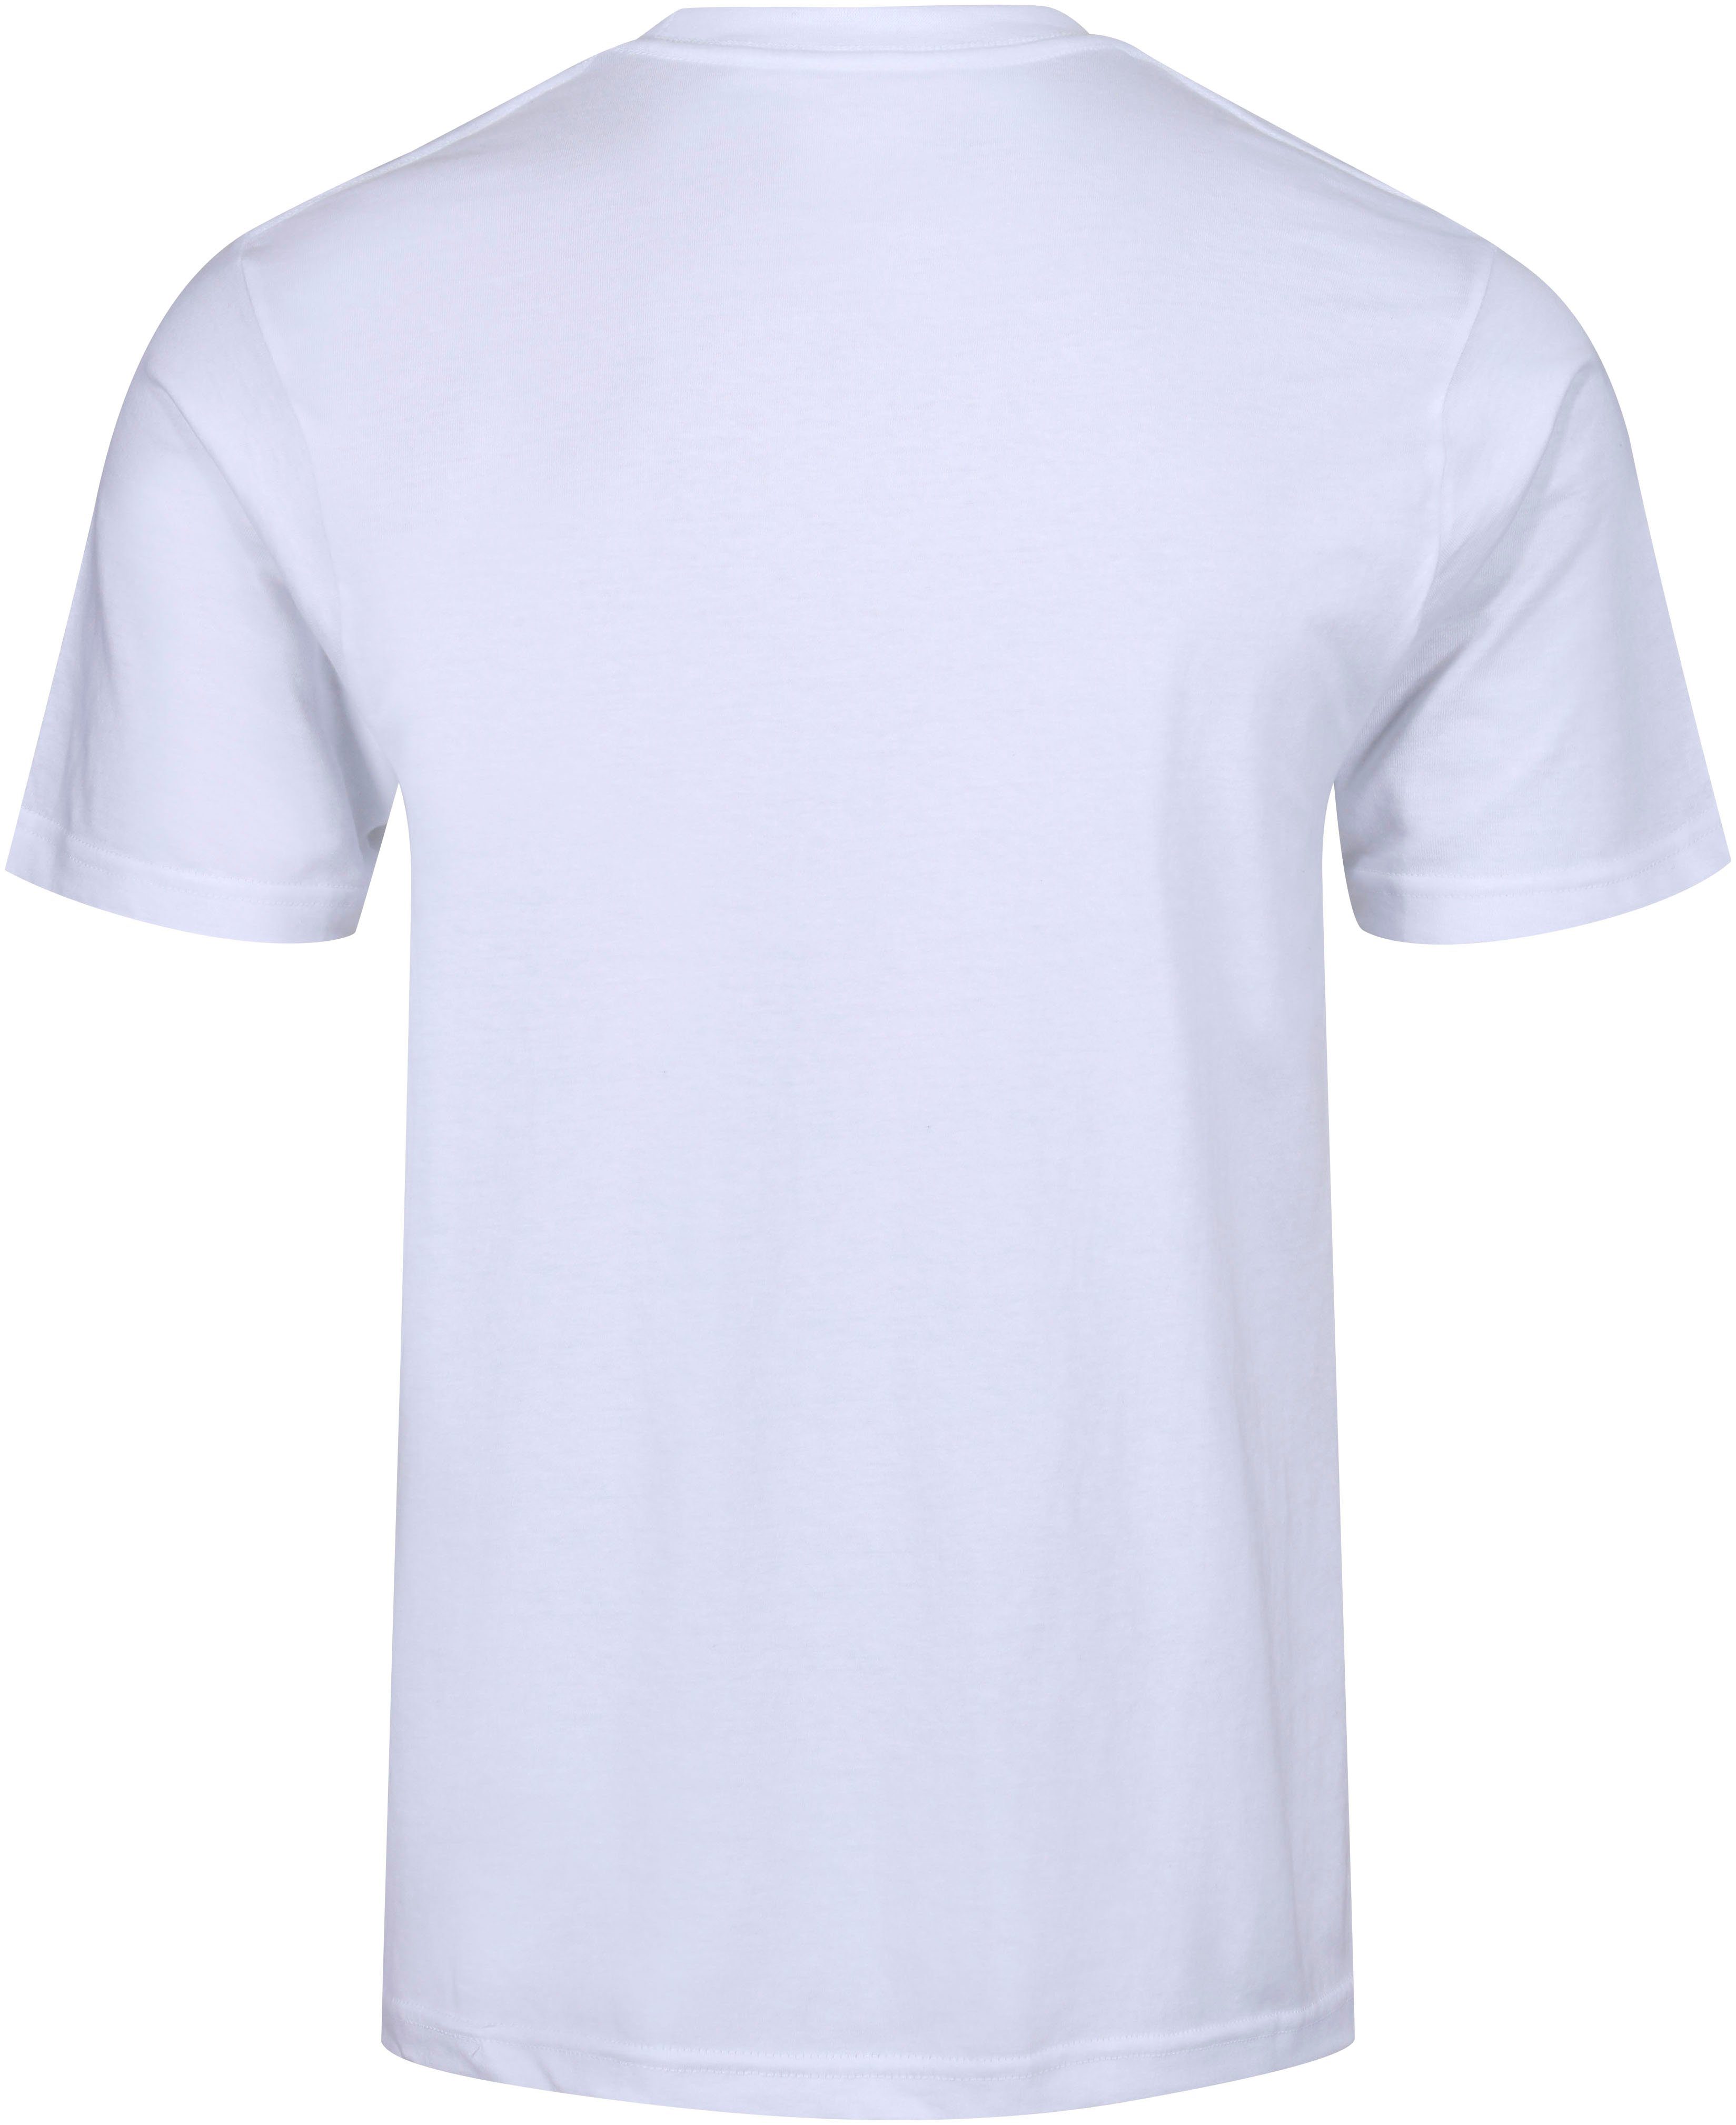 DKNY T-Shirt navy/white/b GIANTS